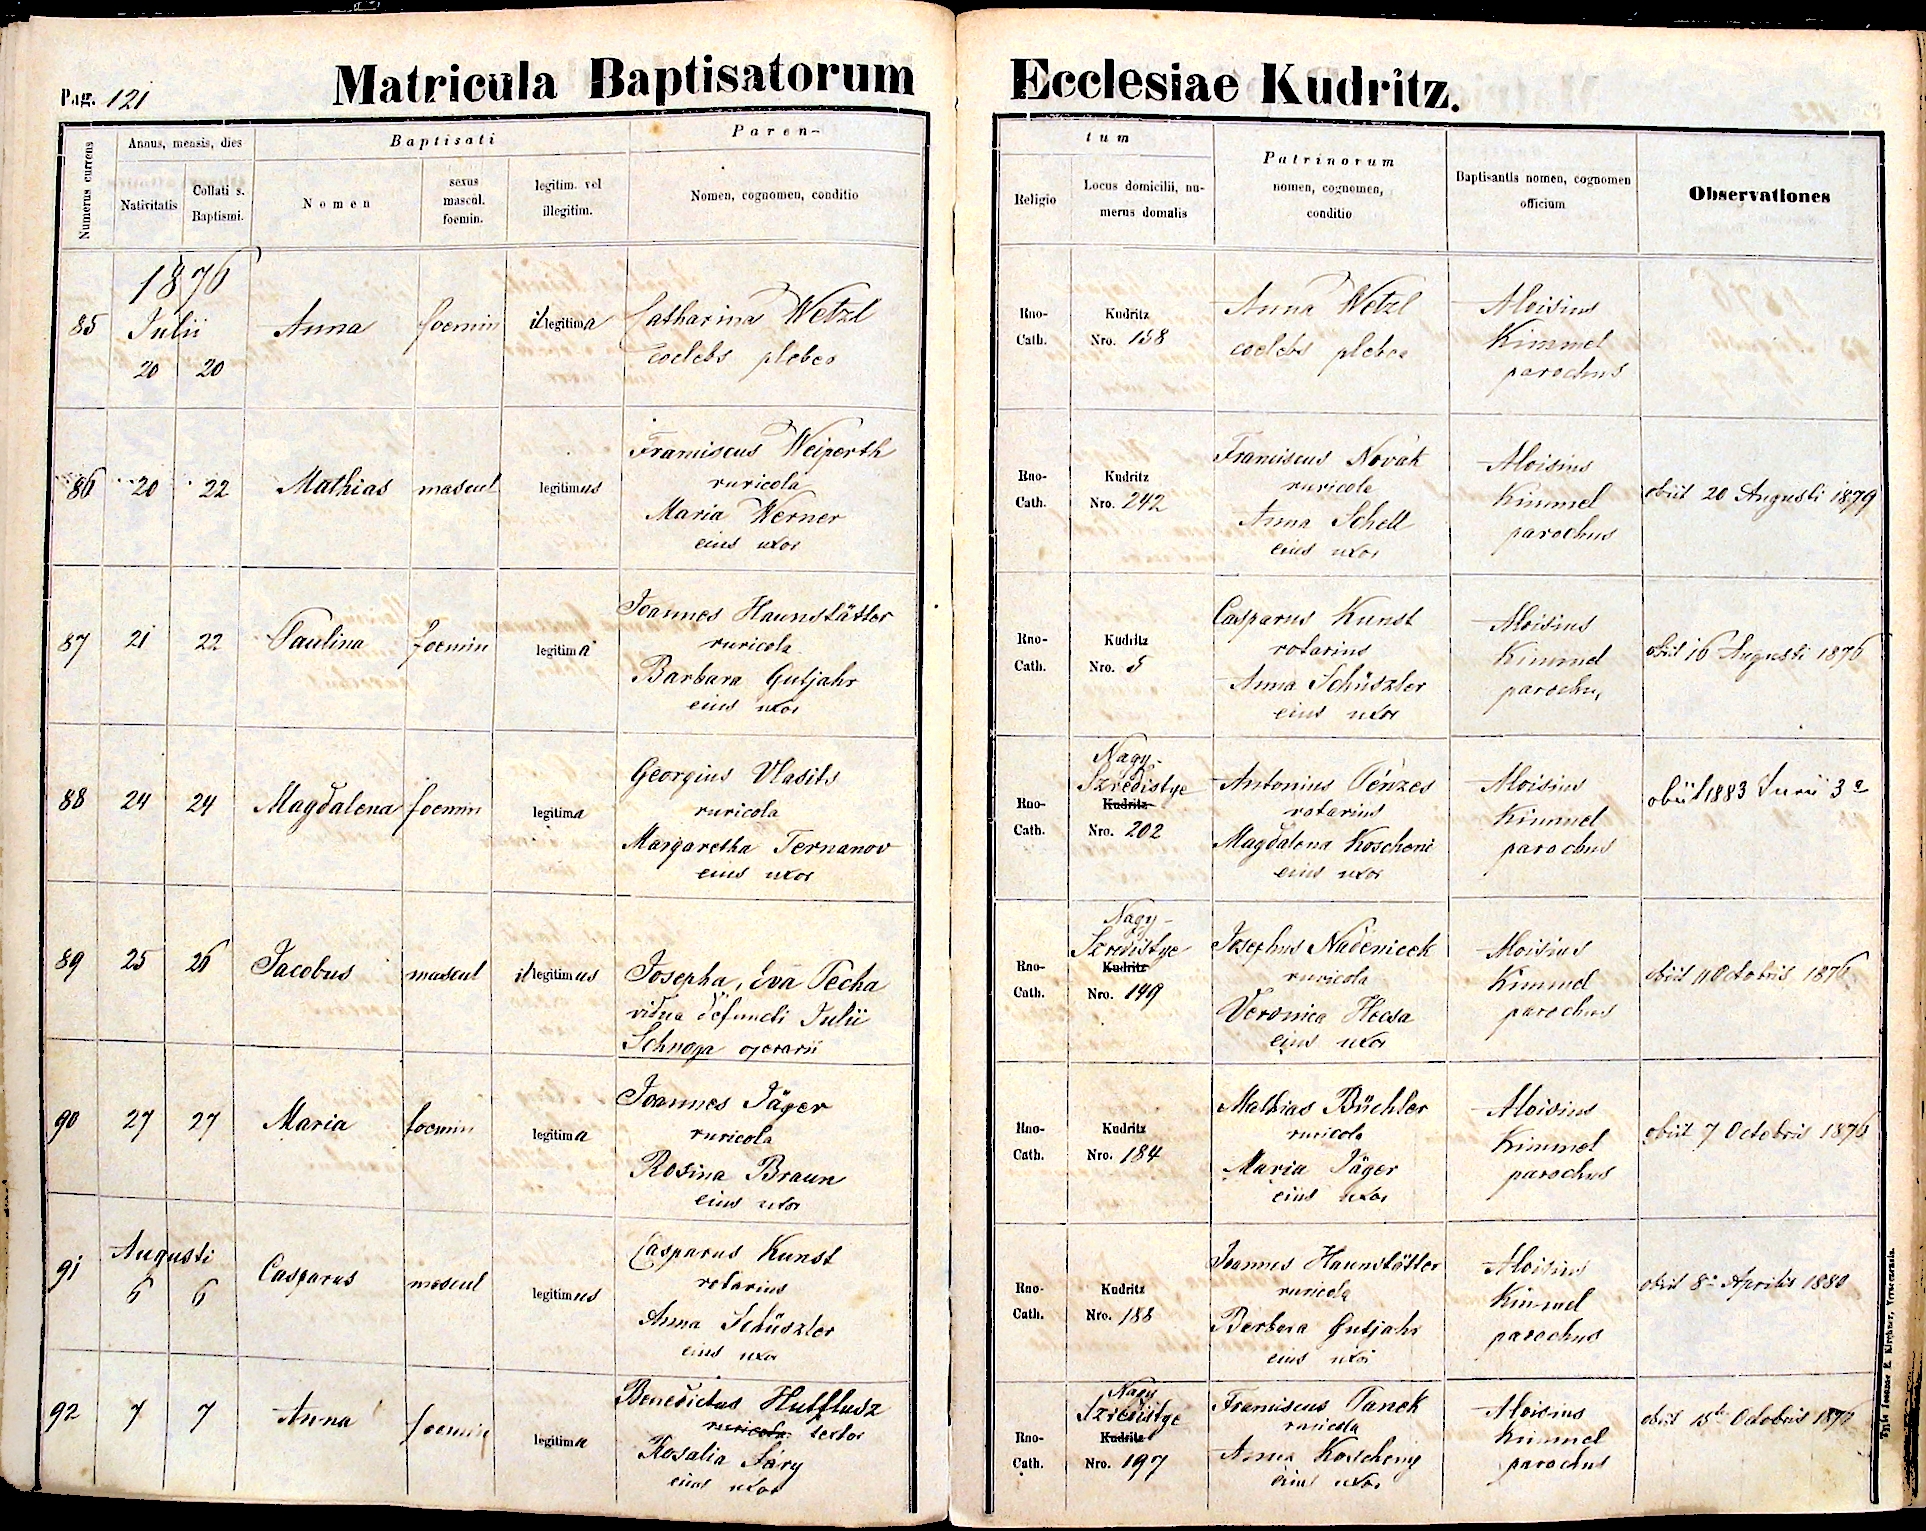 images/church_records/BIRTHS/1870-1879B/1876/121